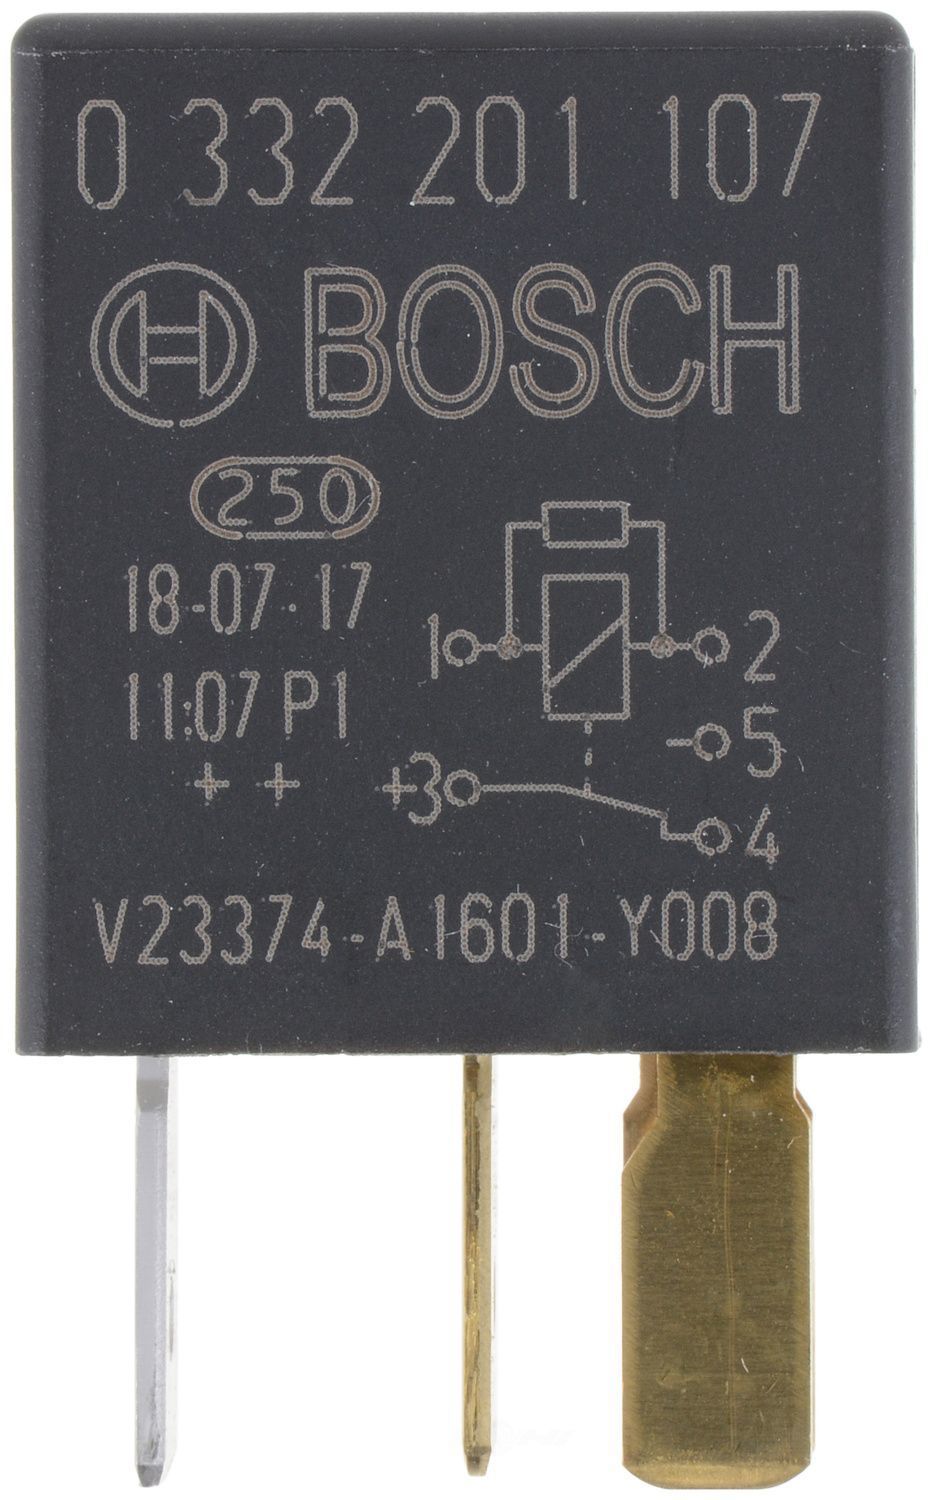 BOSCH - HVAC Motor Relay - BOS 0332201107